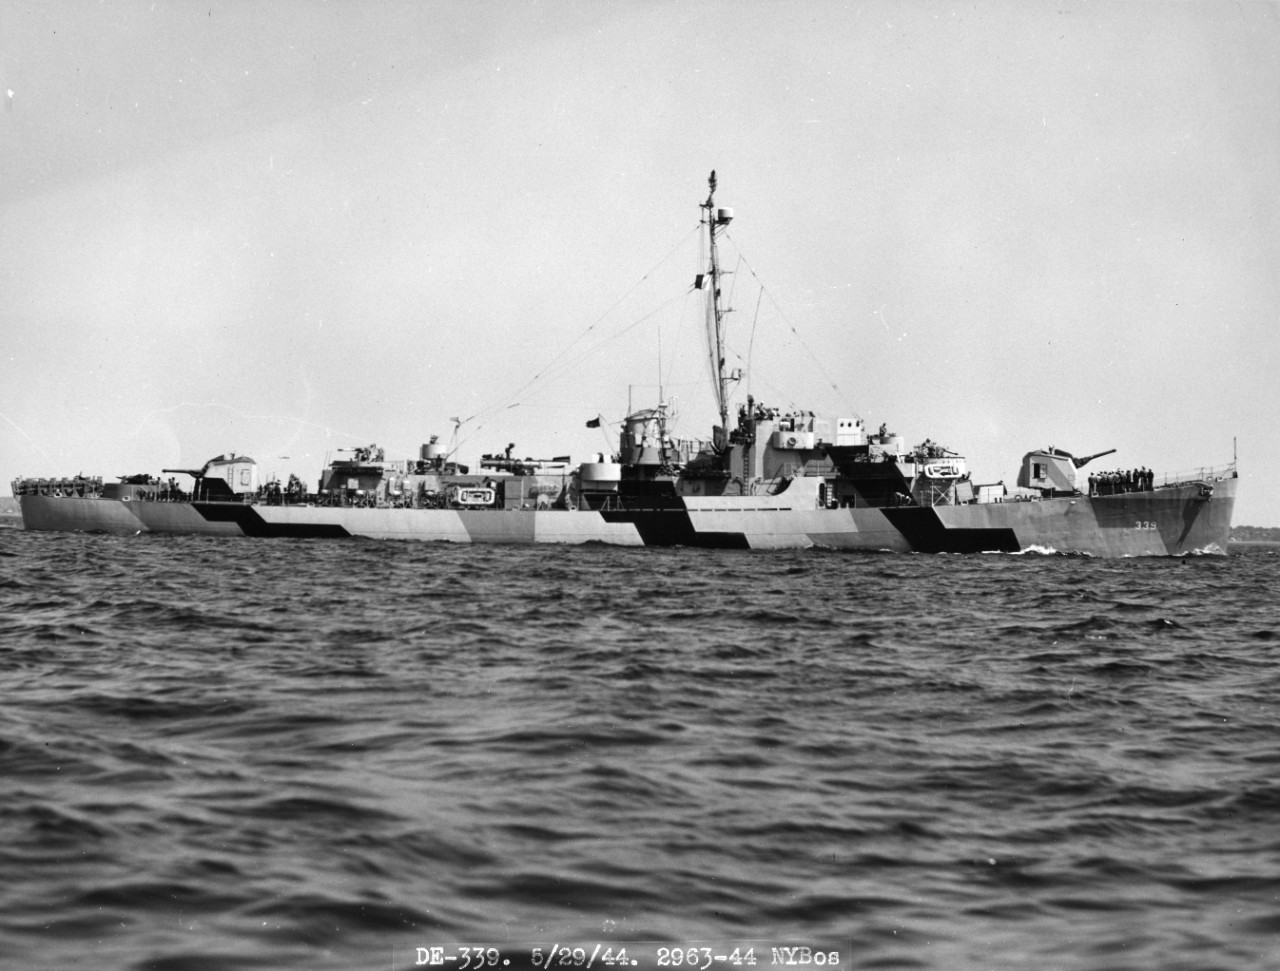 USS John C. Butler (DE-339) underway, possibly off Boston Navy Yard